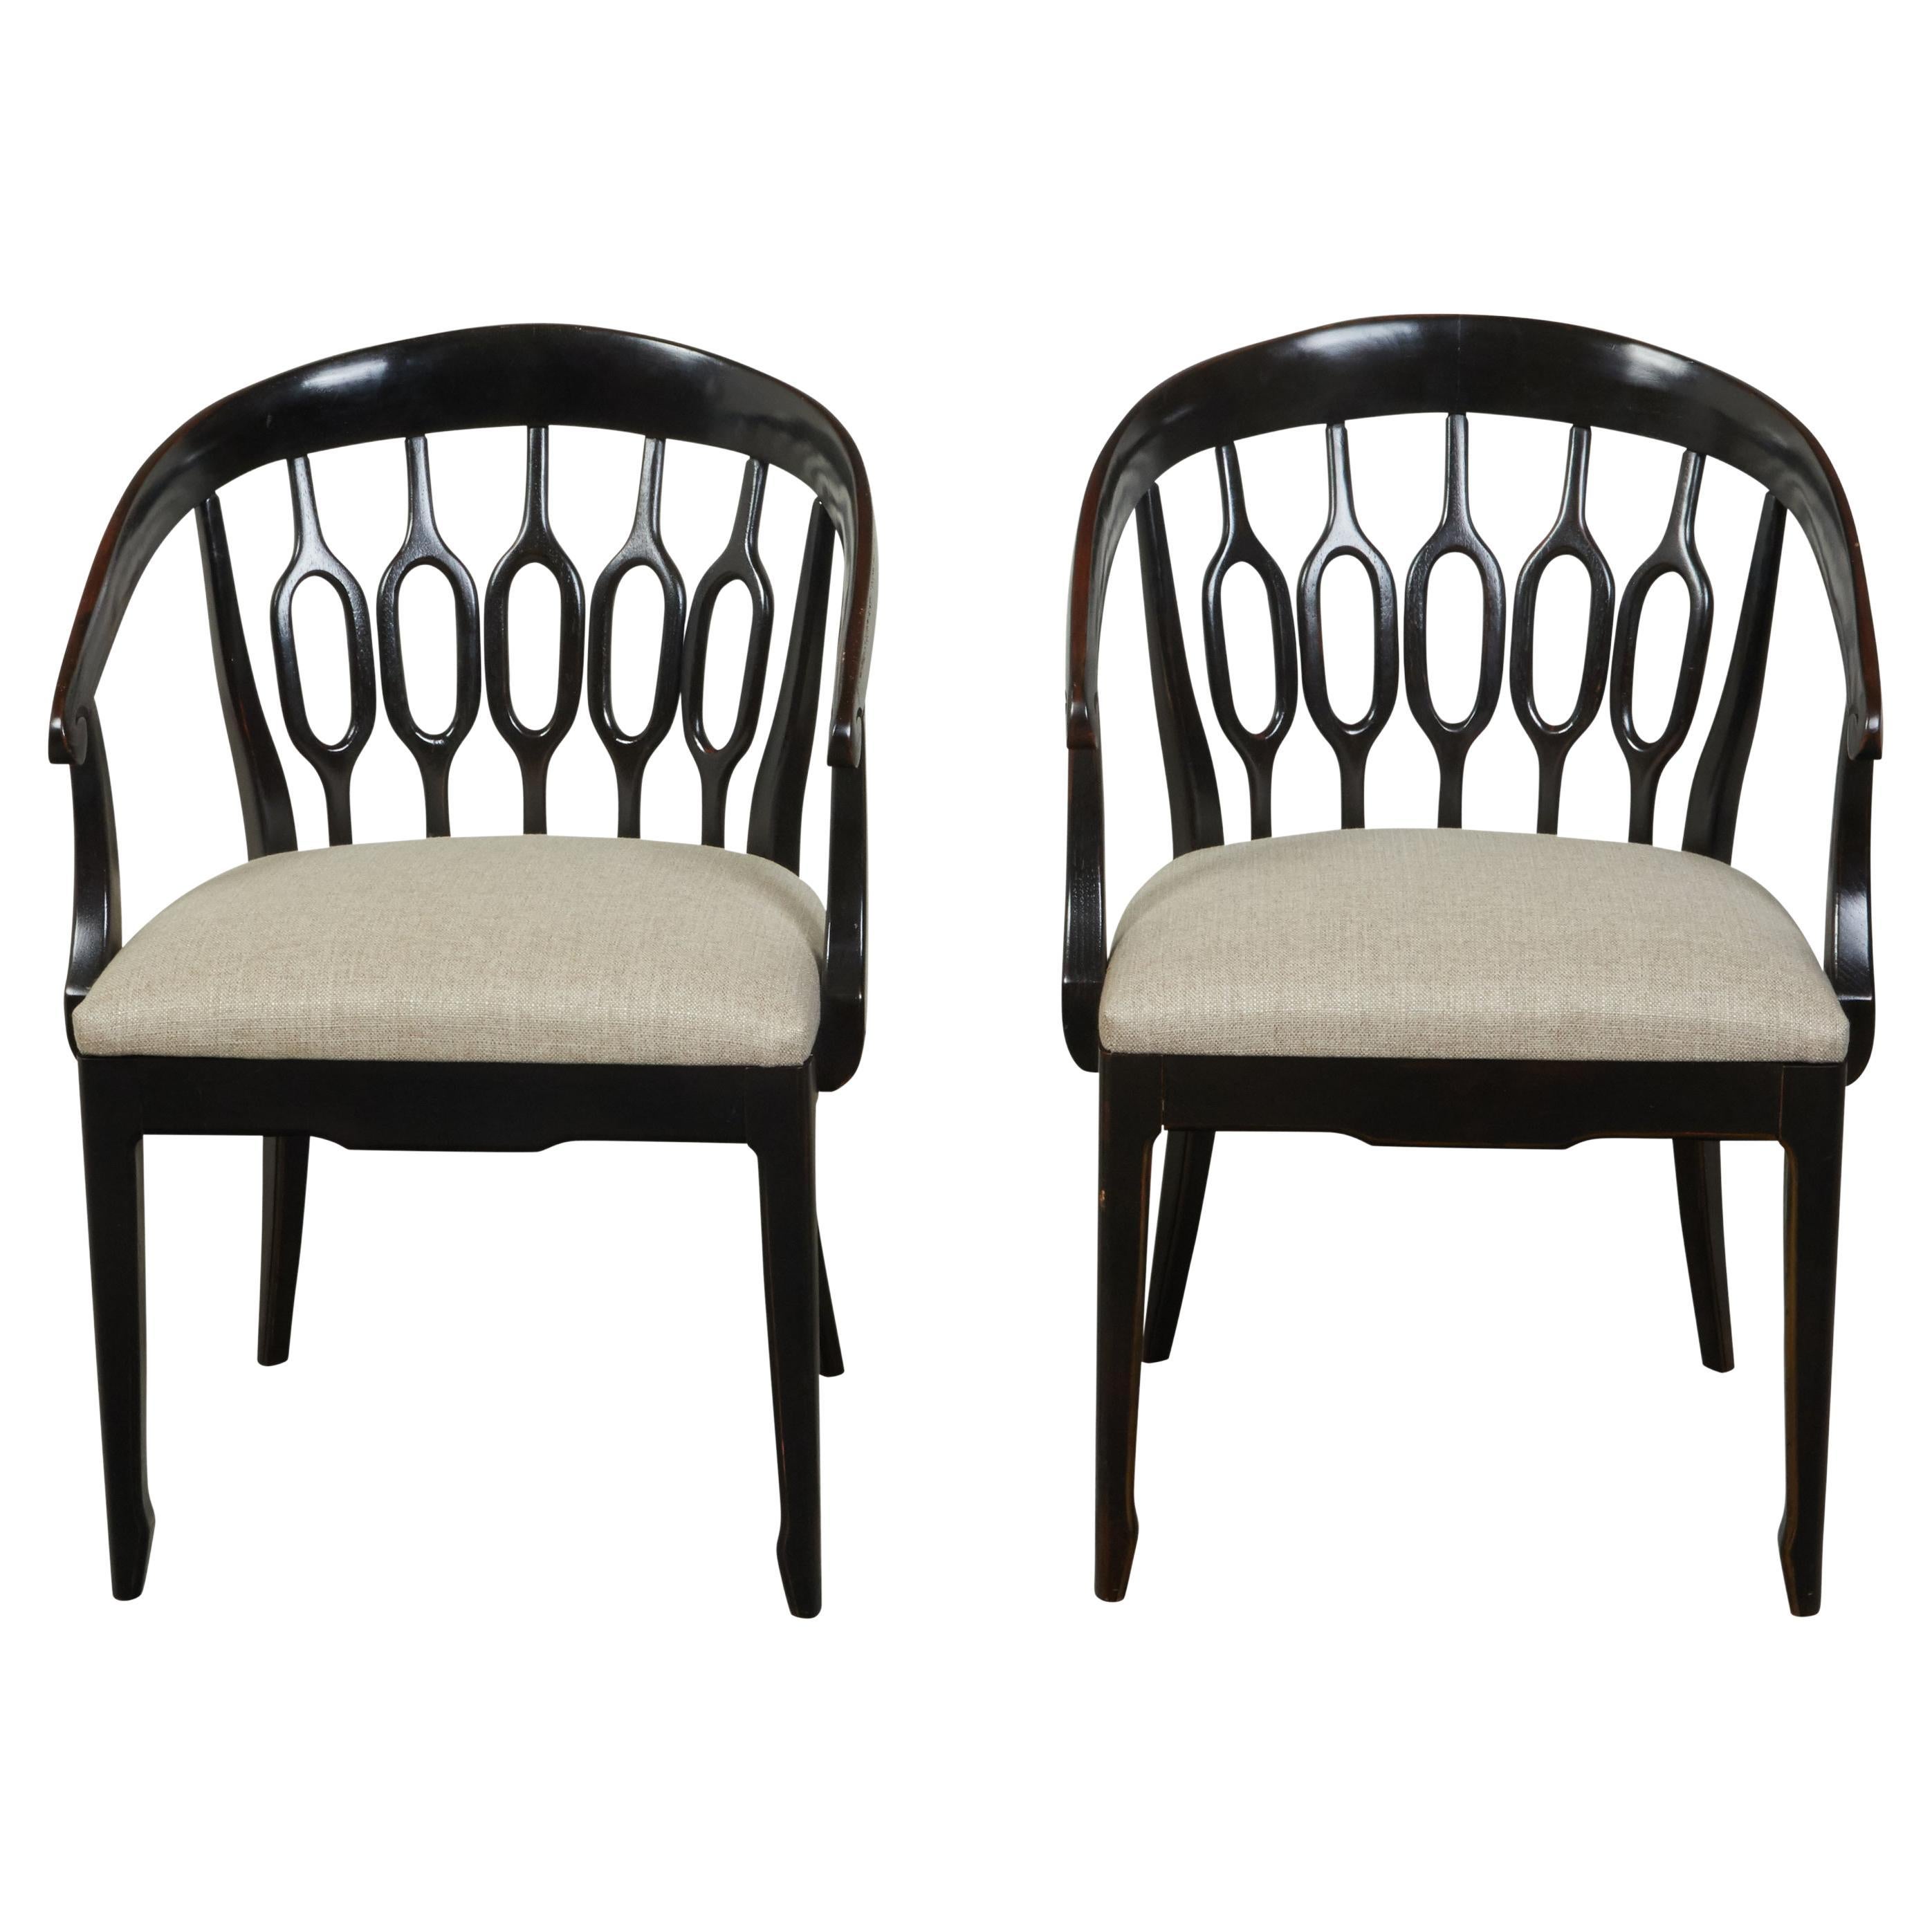 Pair of Midcentury Italian Black Horseshoe Armchairs with New Linen Upholstery